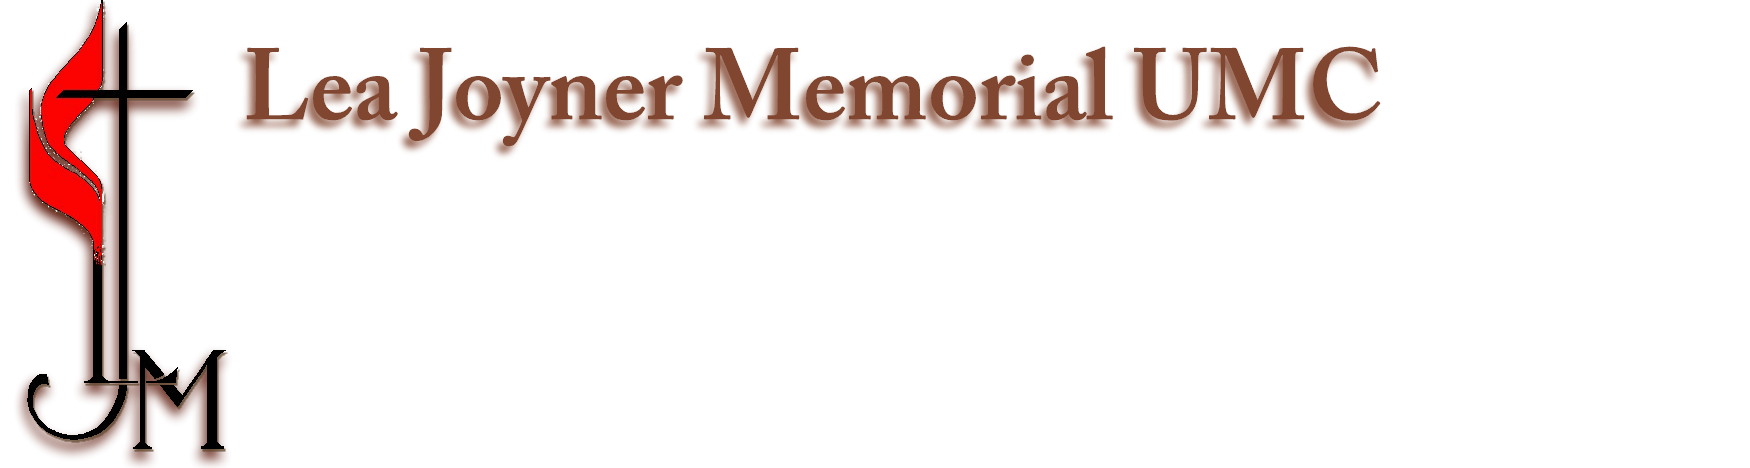 Lea Joyner Memorial UMC